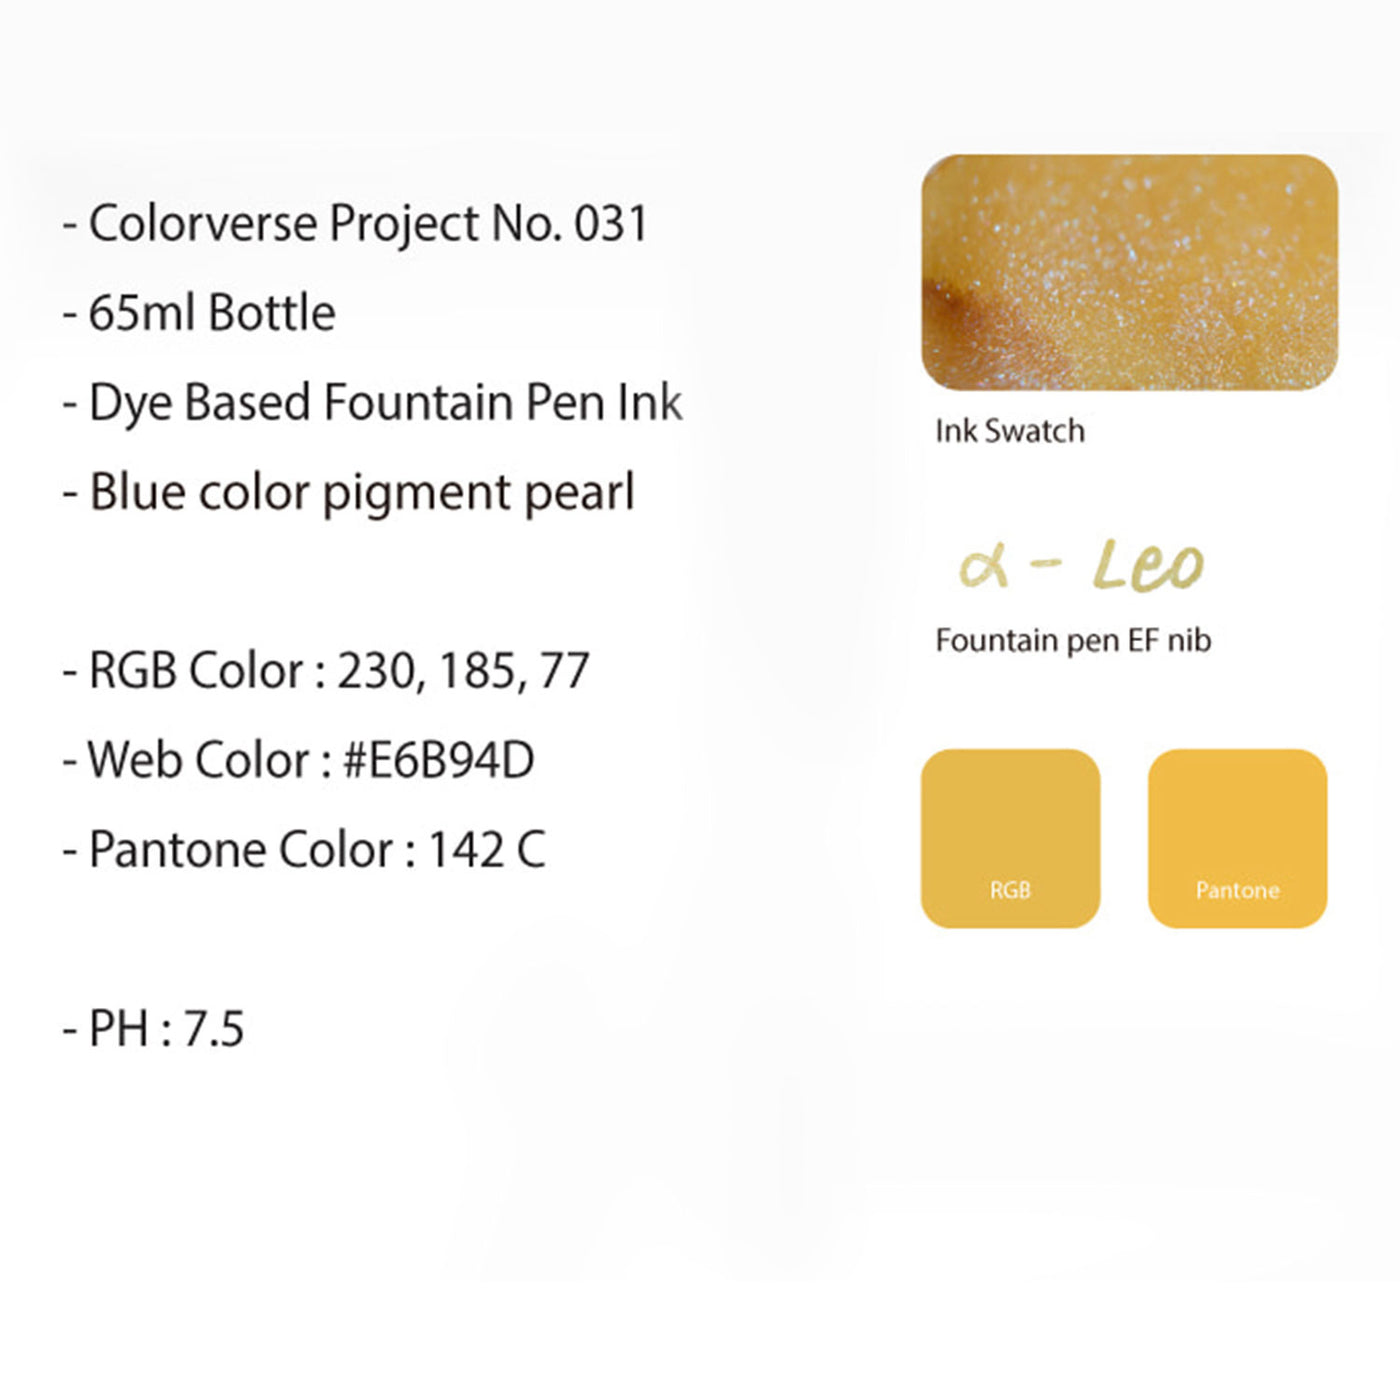 Colorverse Project Constellation II α Leo Ink Bottle, Glistening Yellow - 65ml